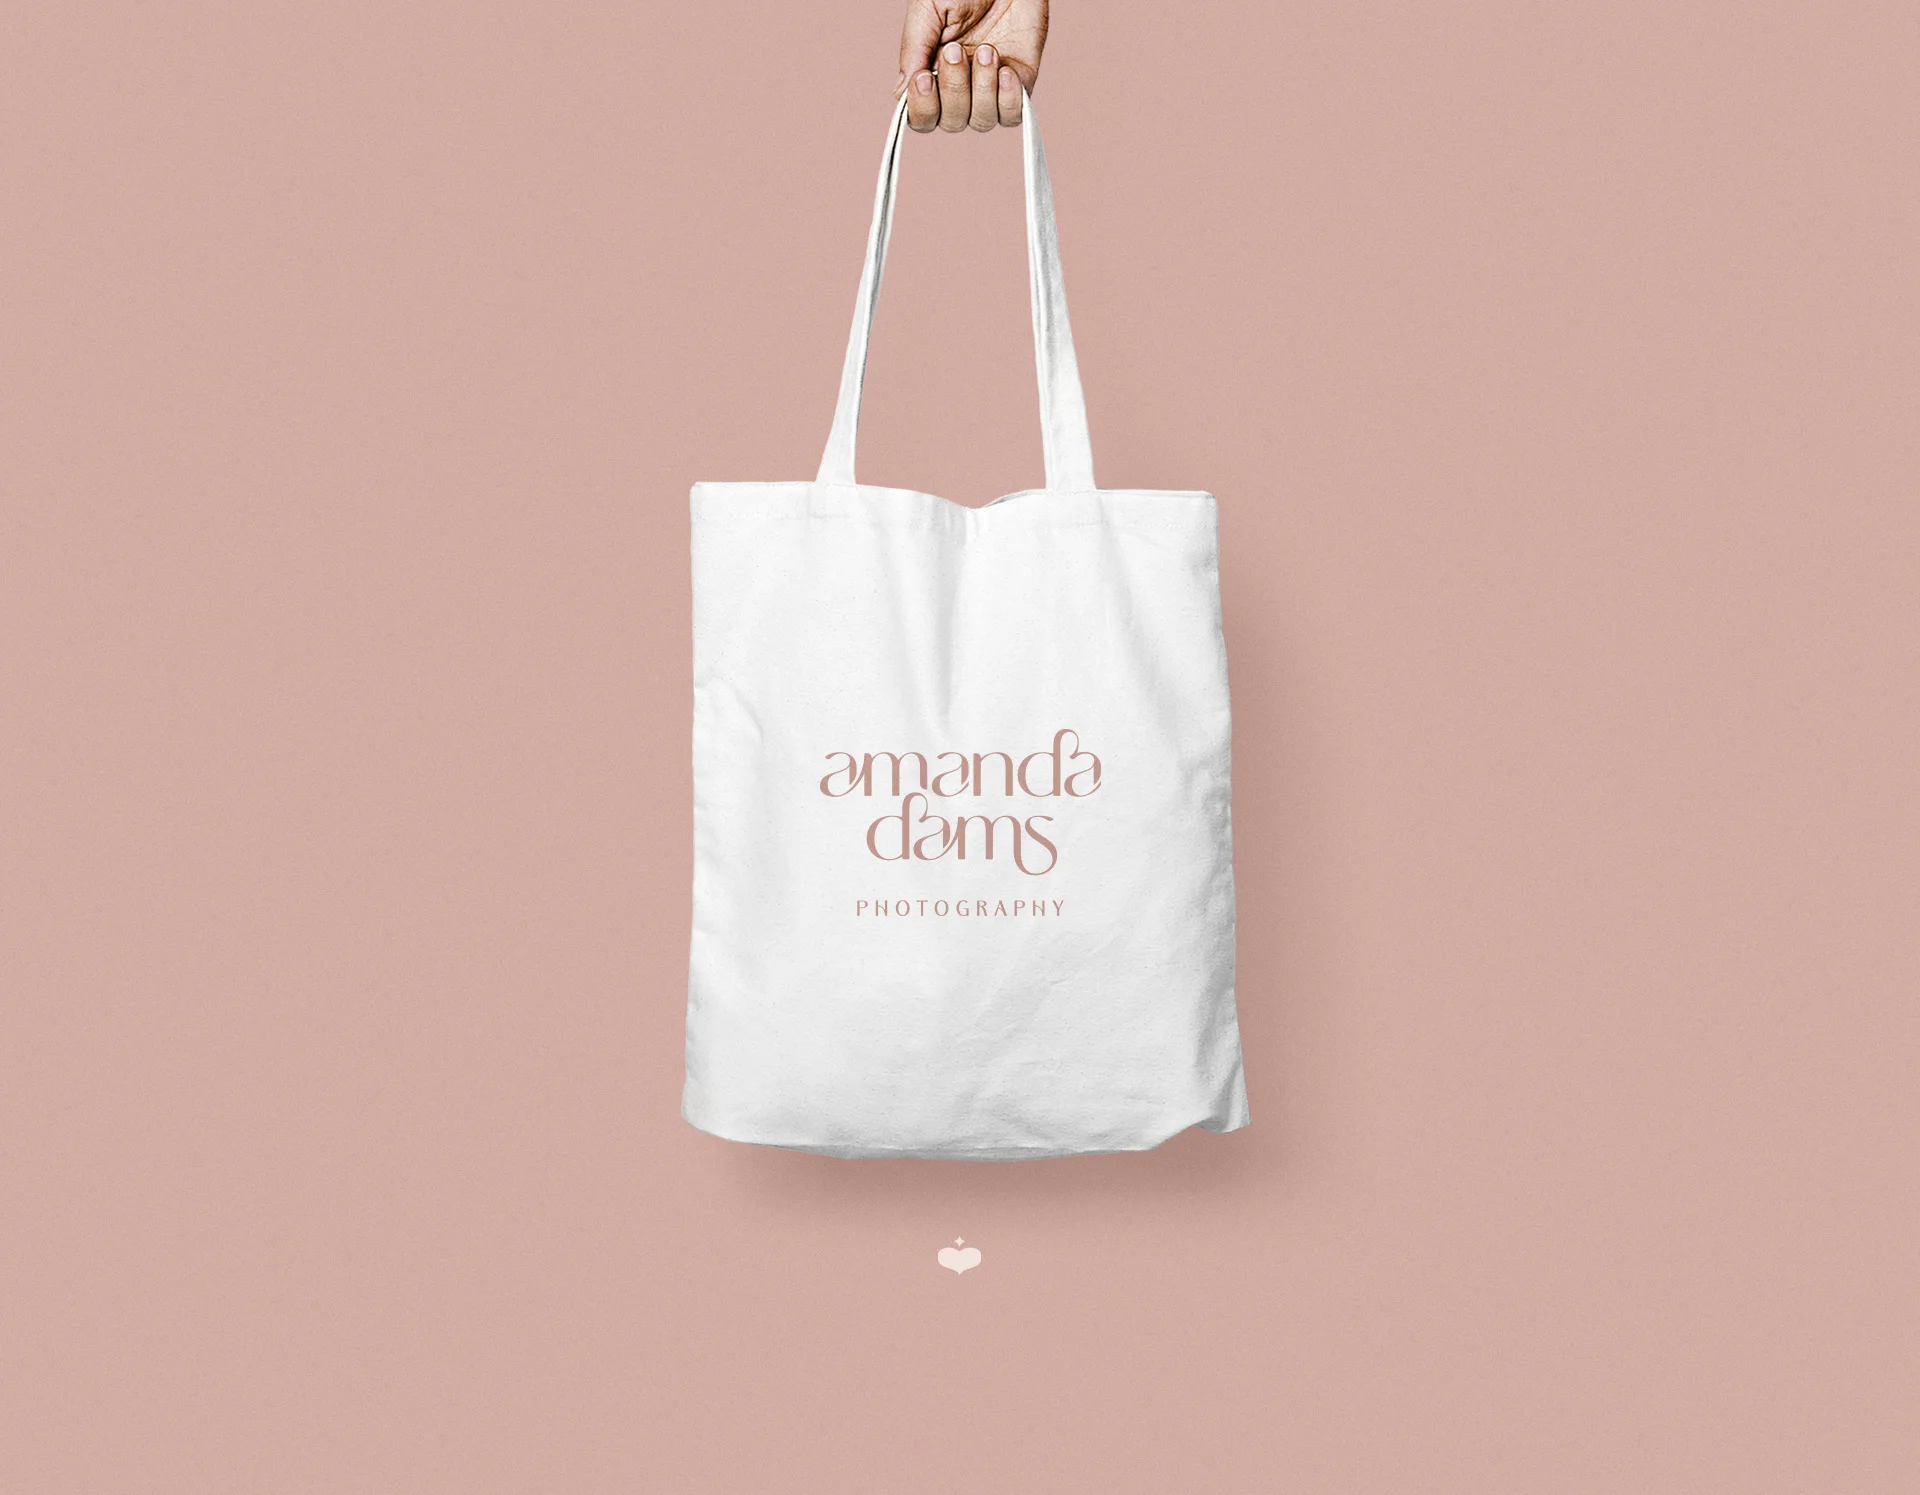 amanda dams photography luxury product delivery bag